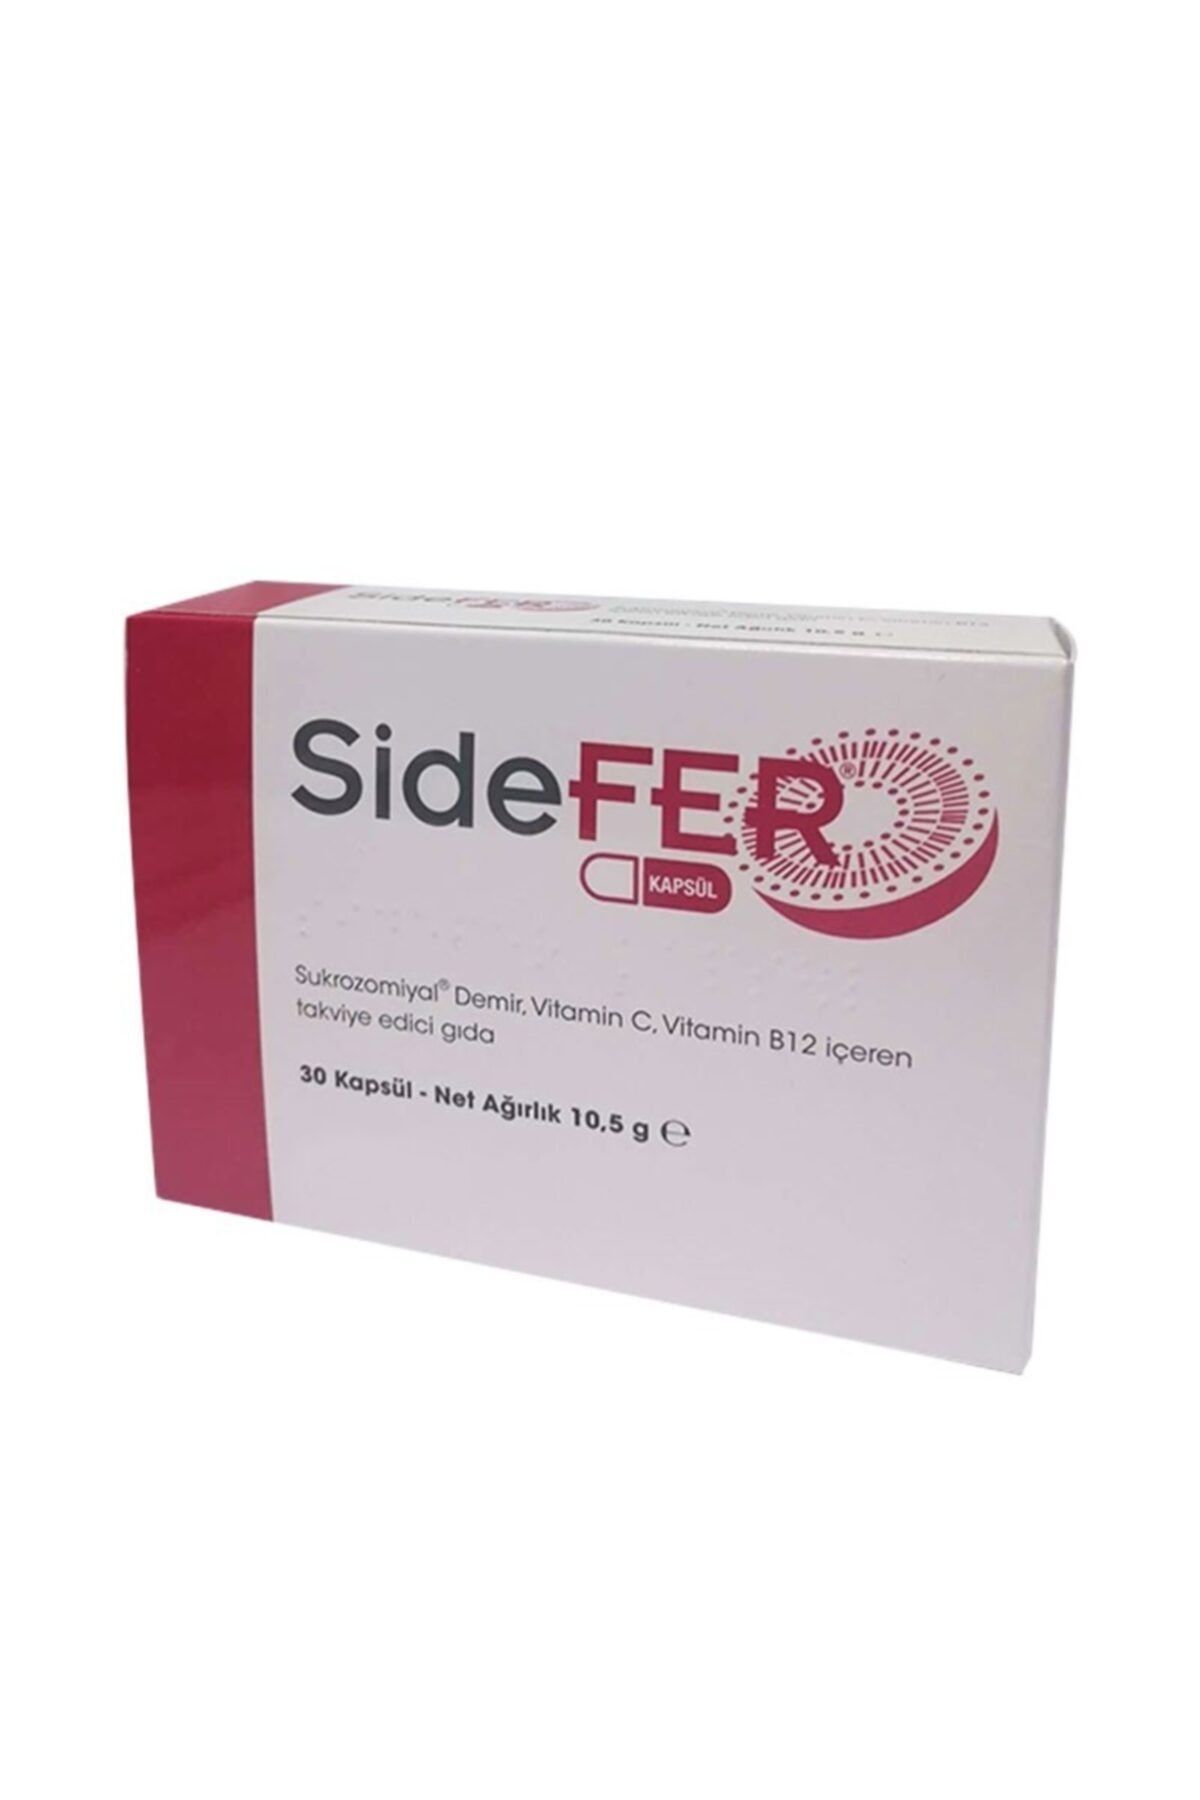 Sidefer Vitamin C Ve Vitamin B12 30 Kapsül